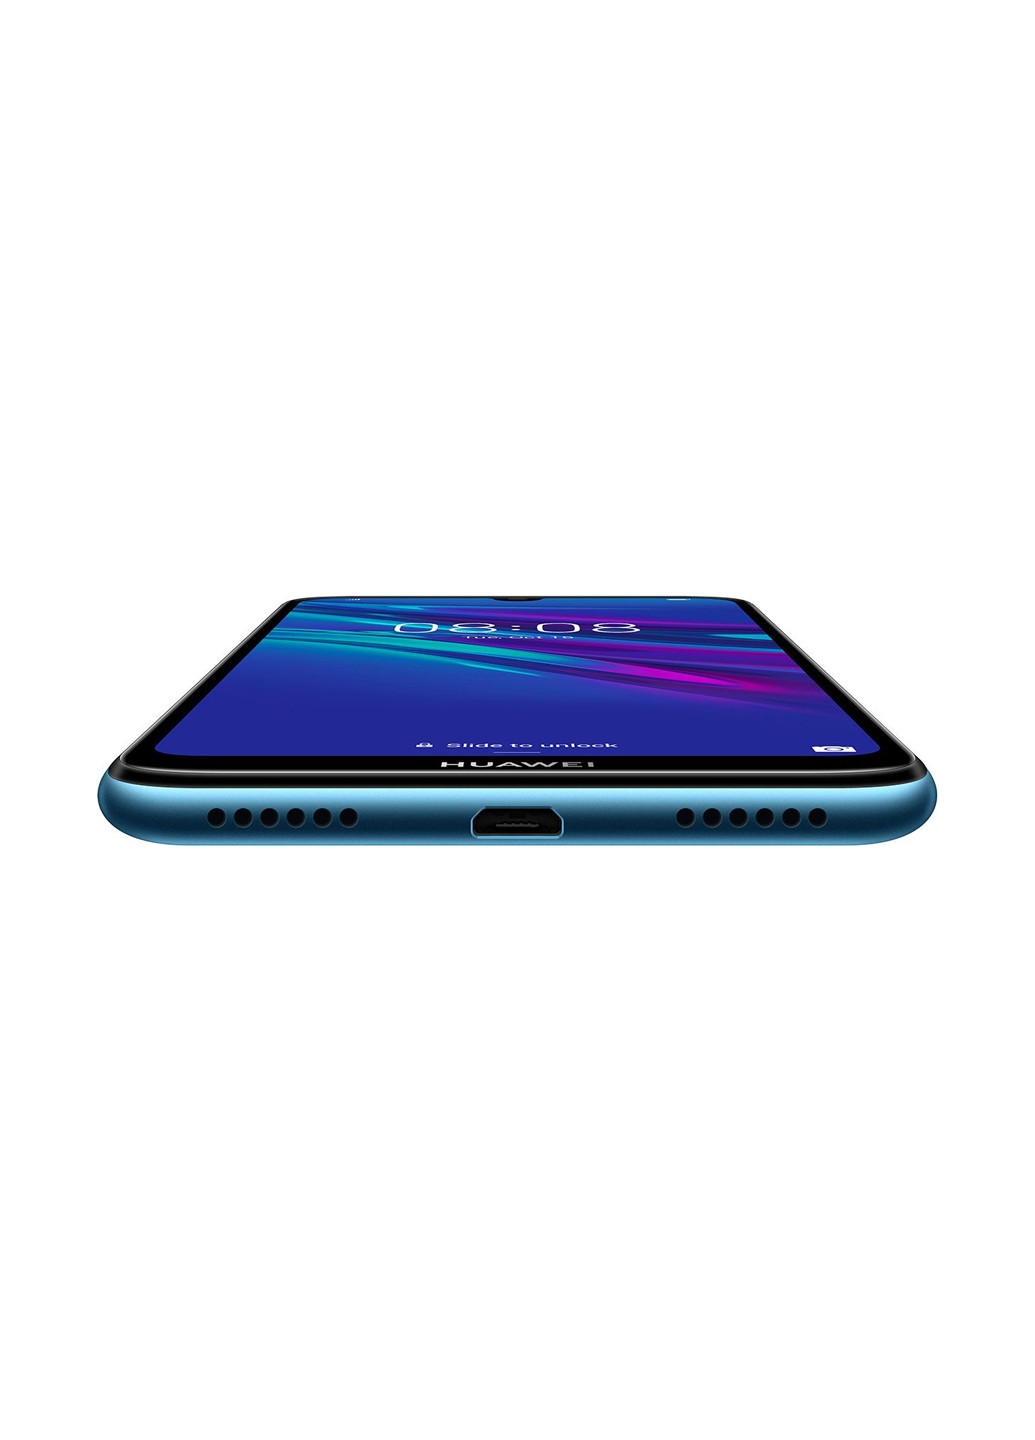 Смартфон Huawei y6 2019 2/32gb sapphire blue (mrd-lх1) (130359119)